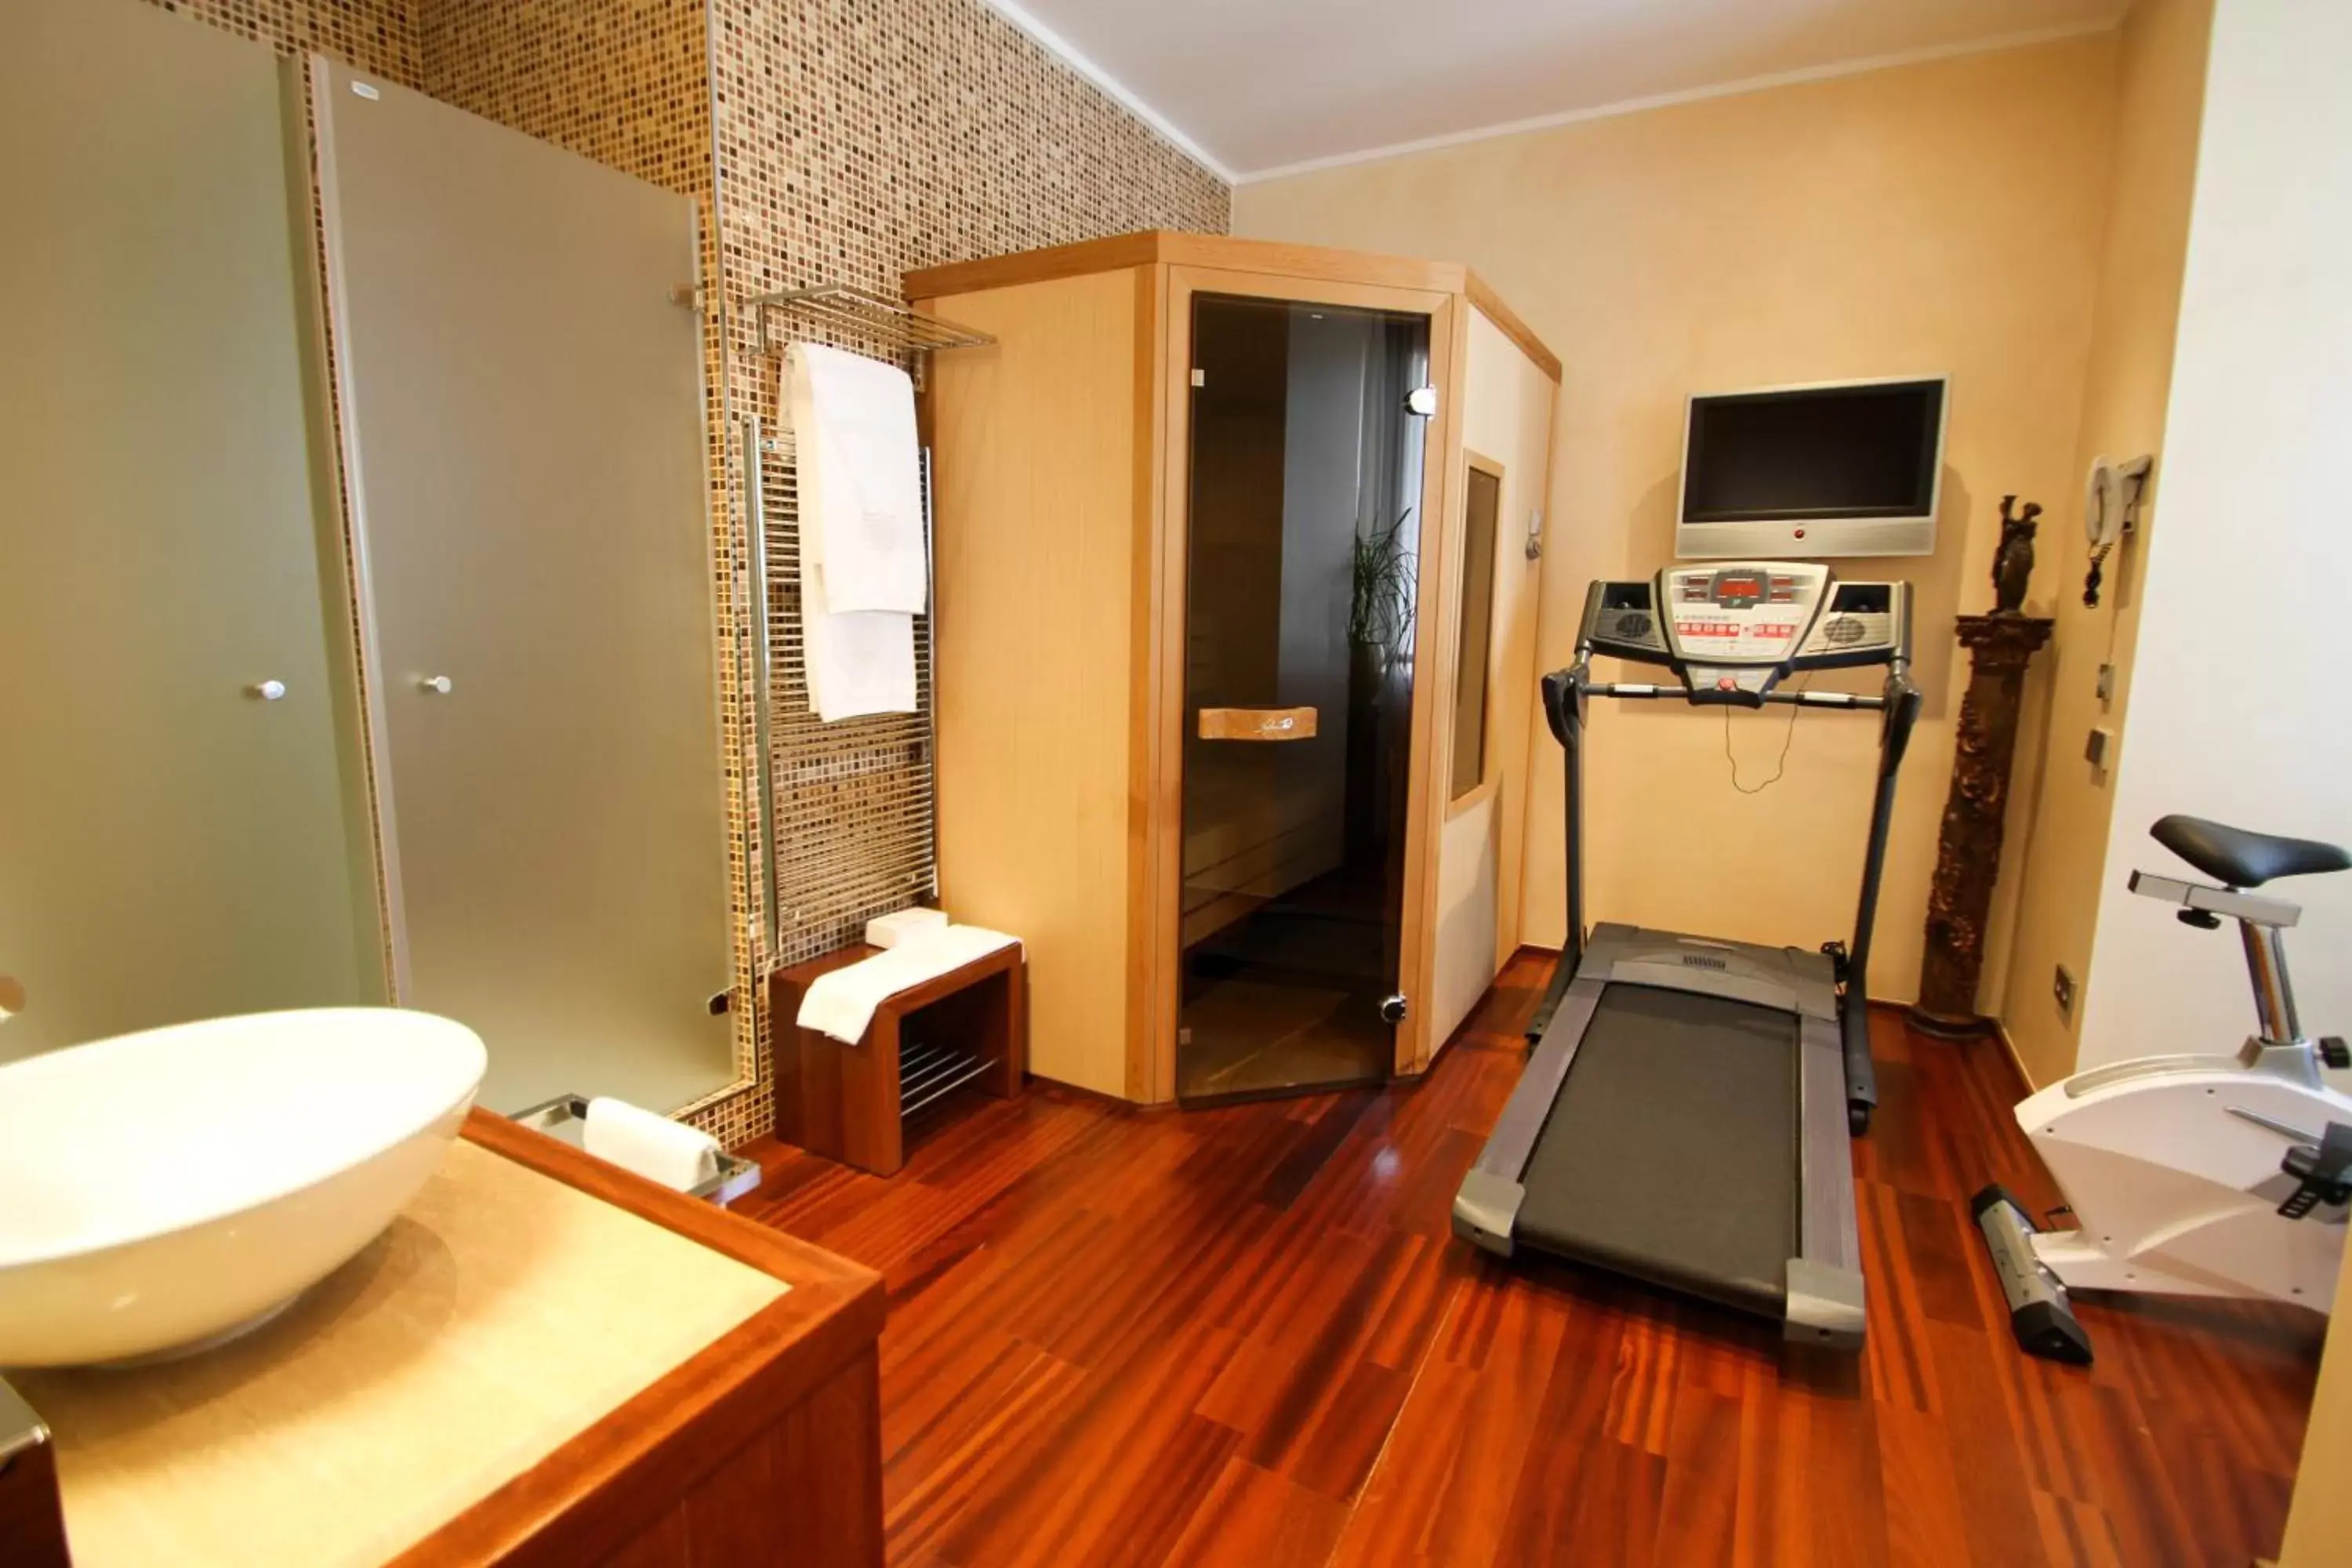 Photo of the whole room, Bathroom in Mirador de Dalt Vila-Relais & Chateaux